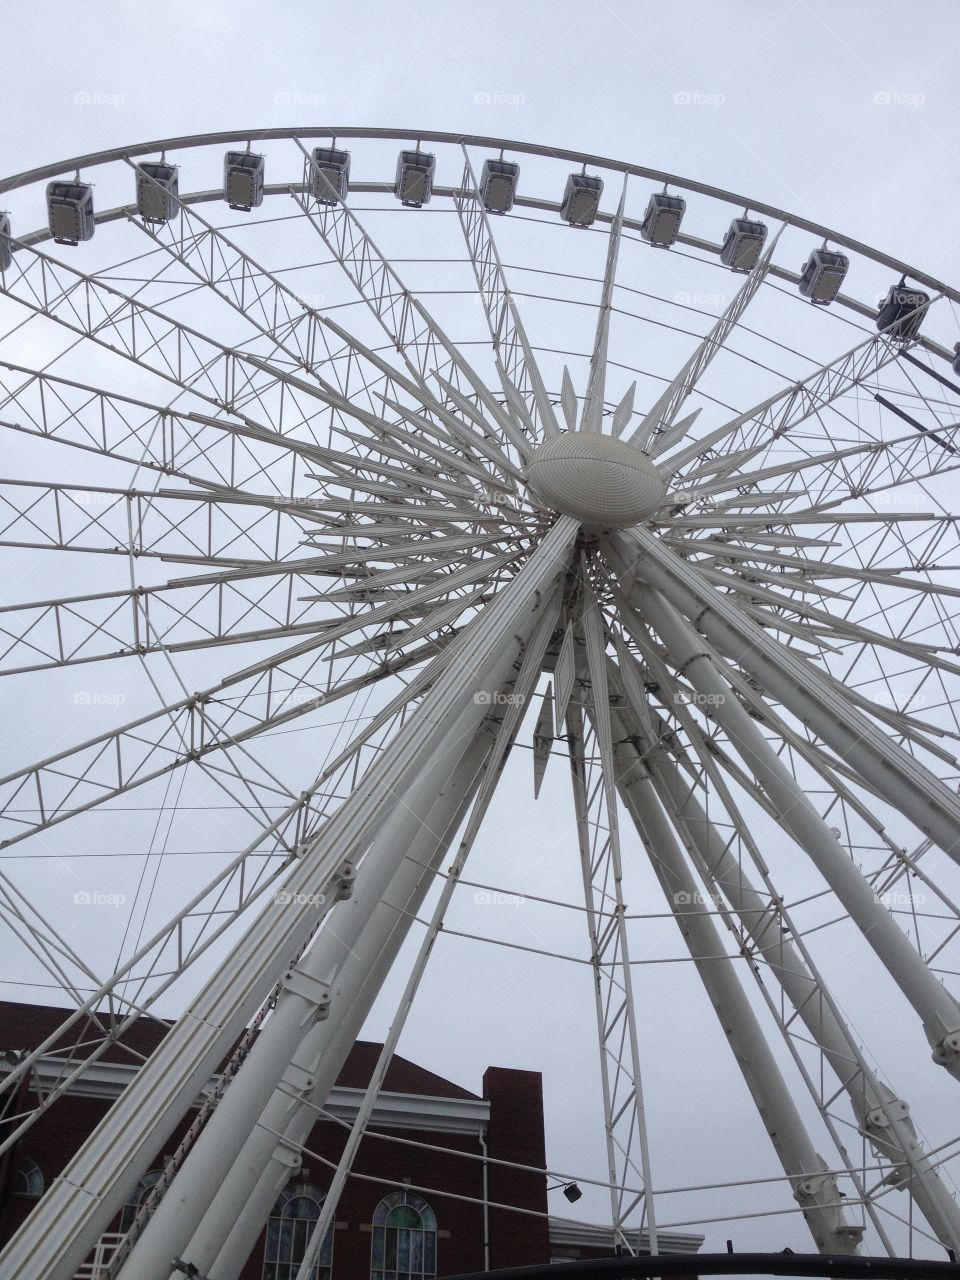 Ferris Wheel
